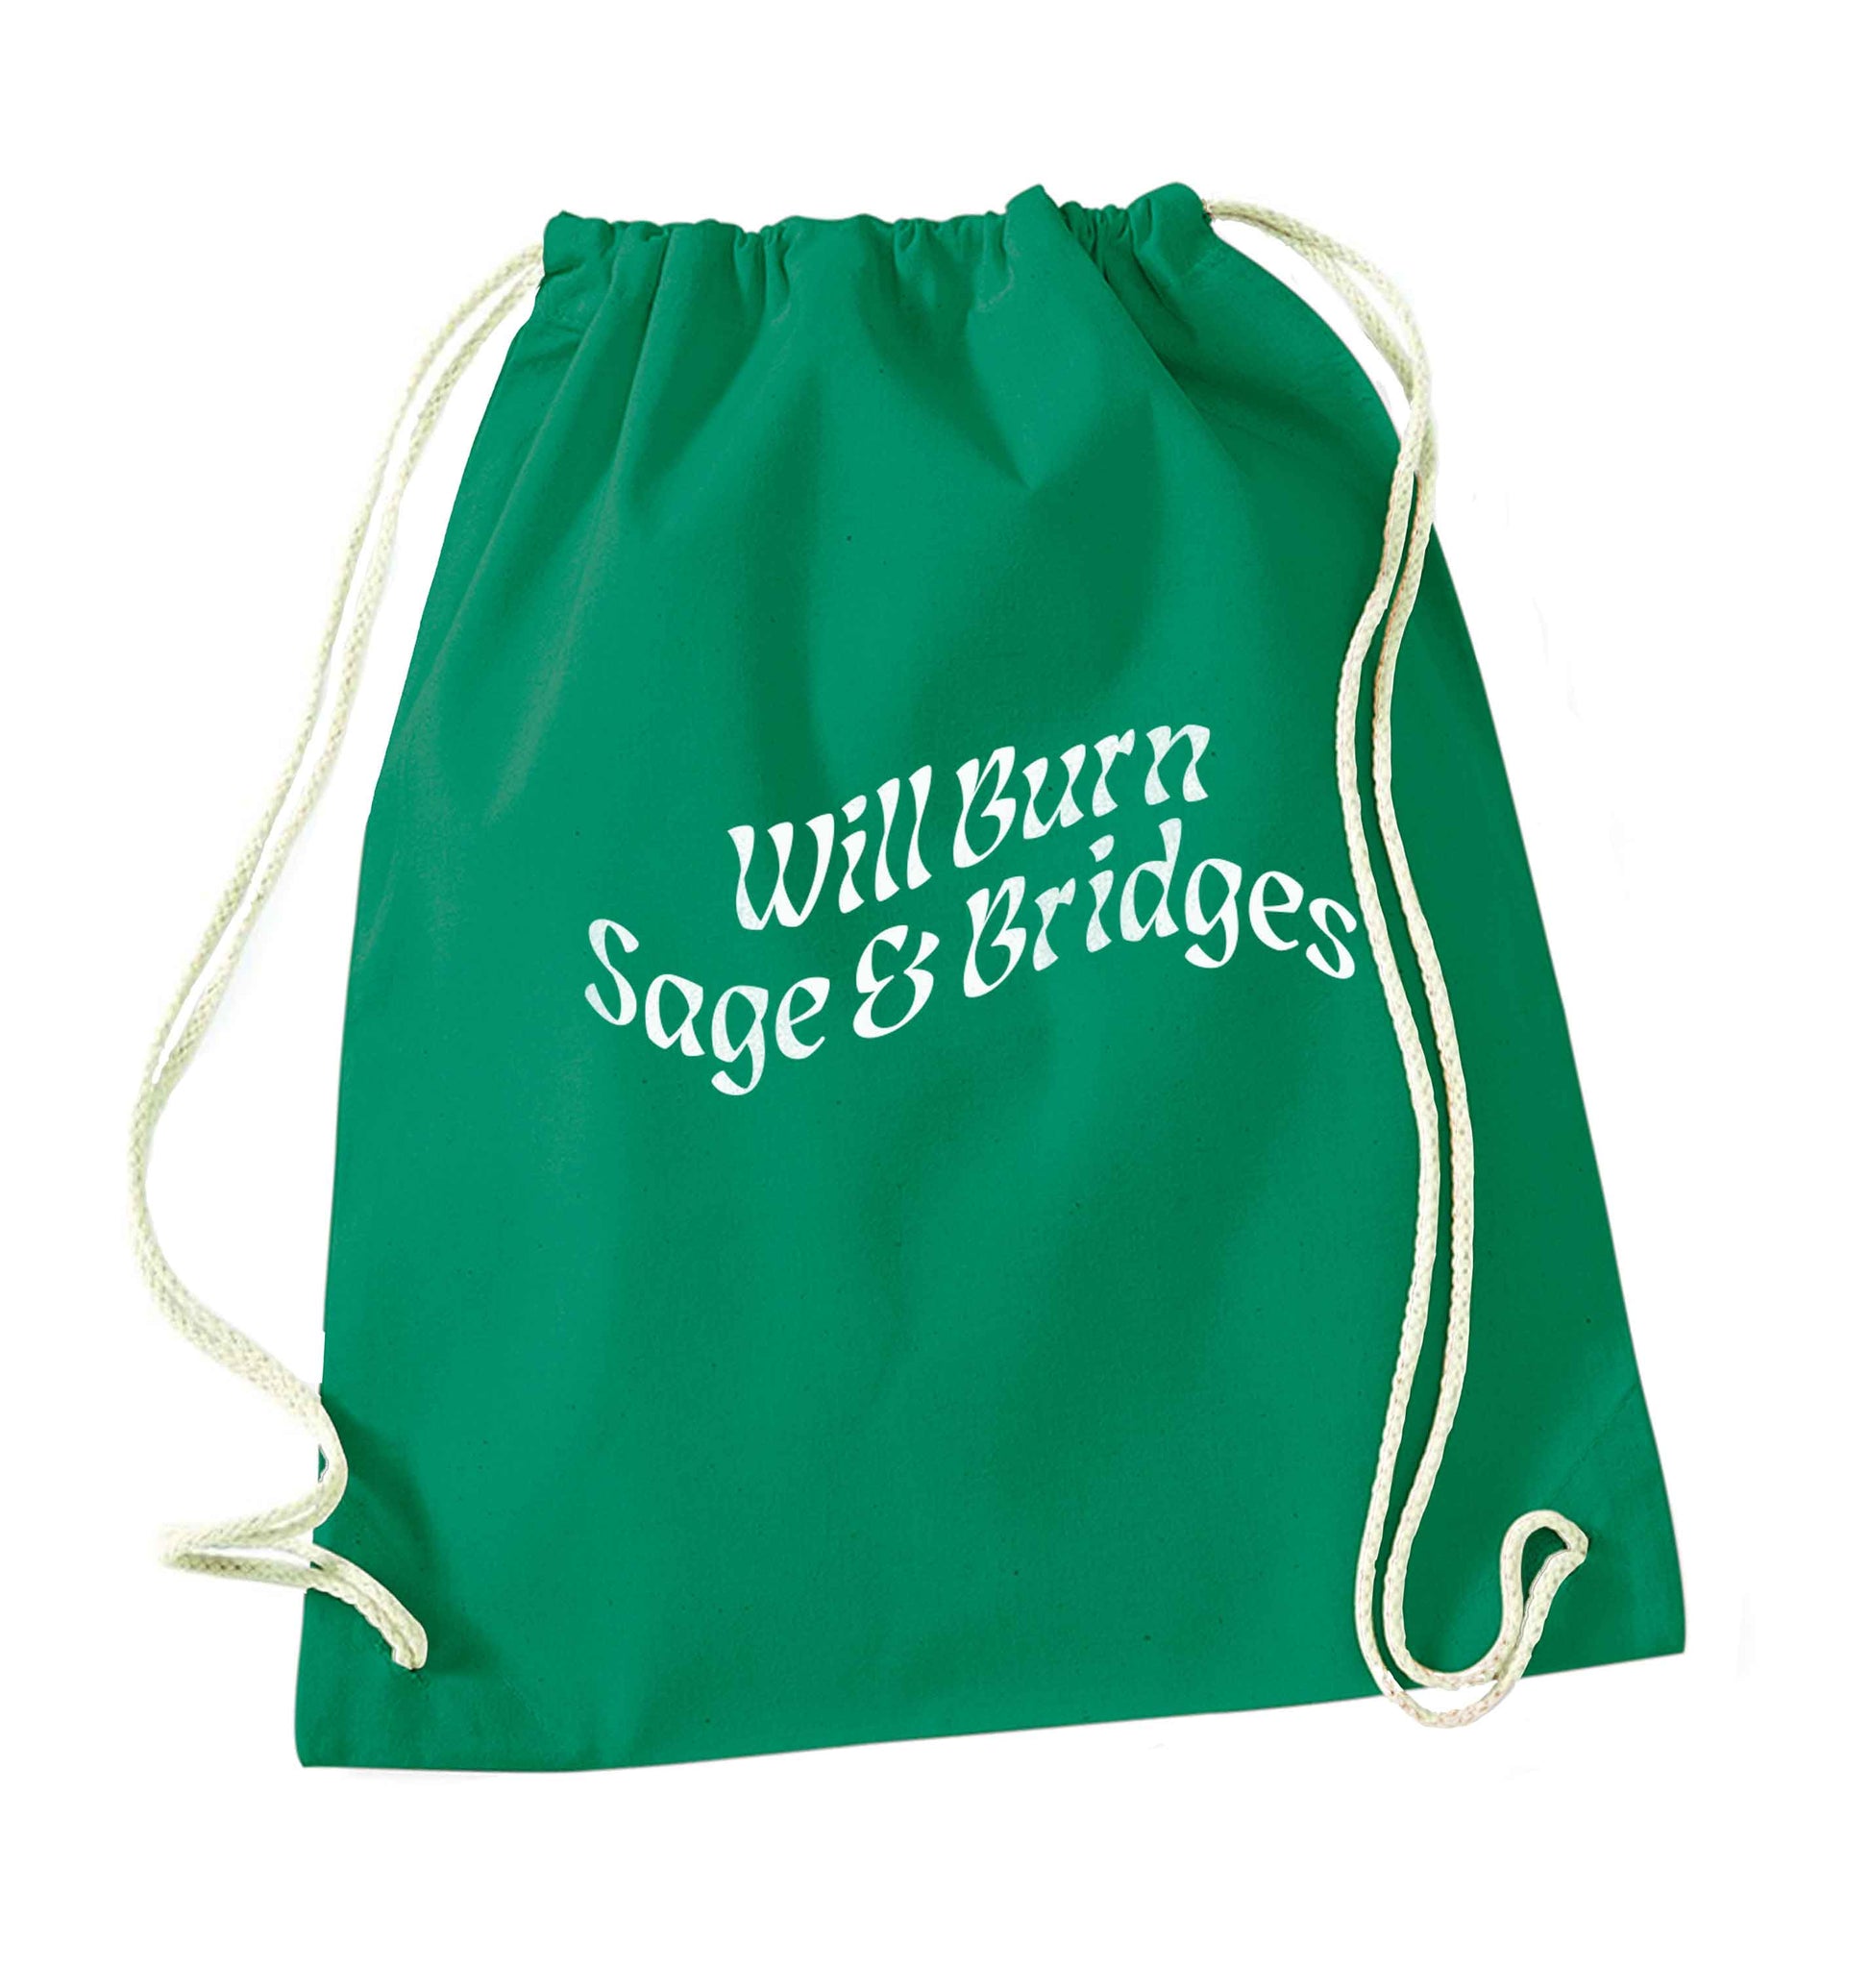 Will burn bridges and sage green drawstring bag